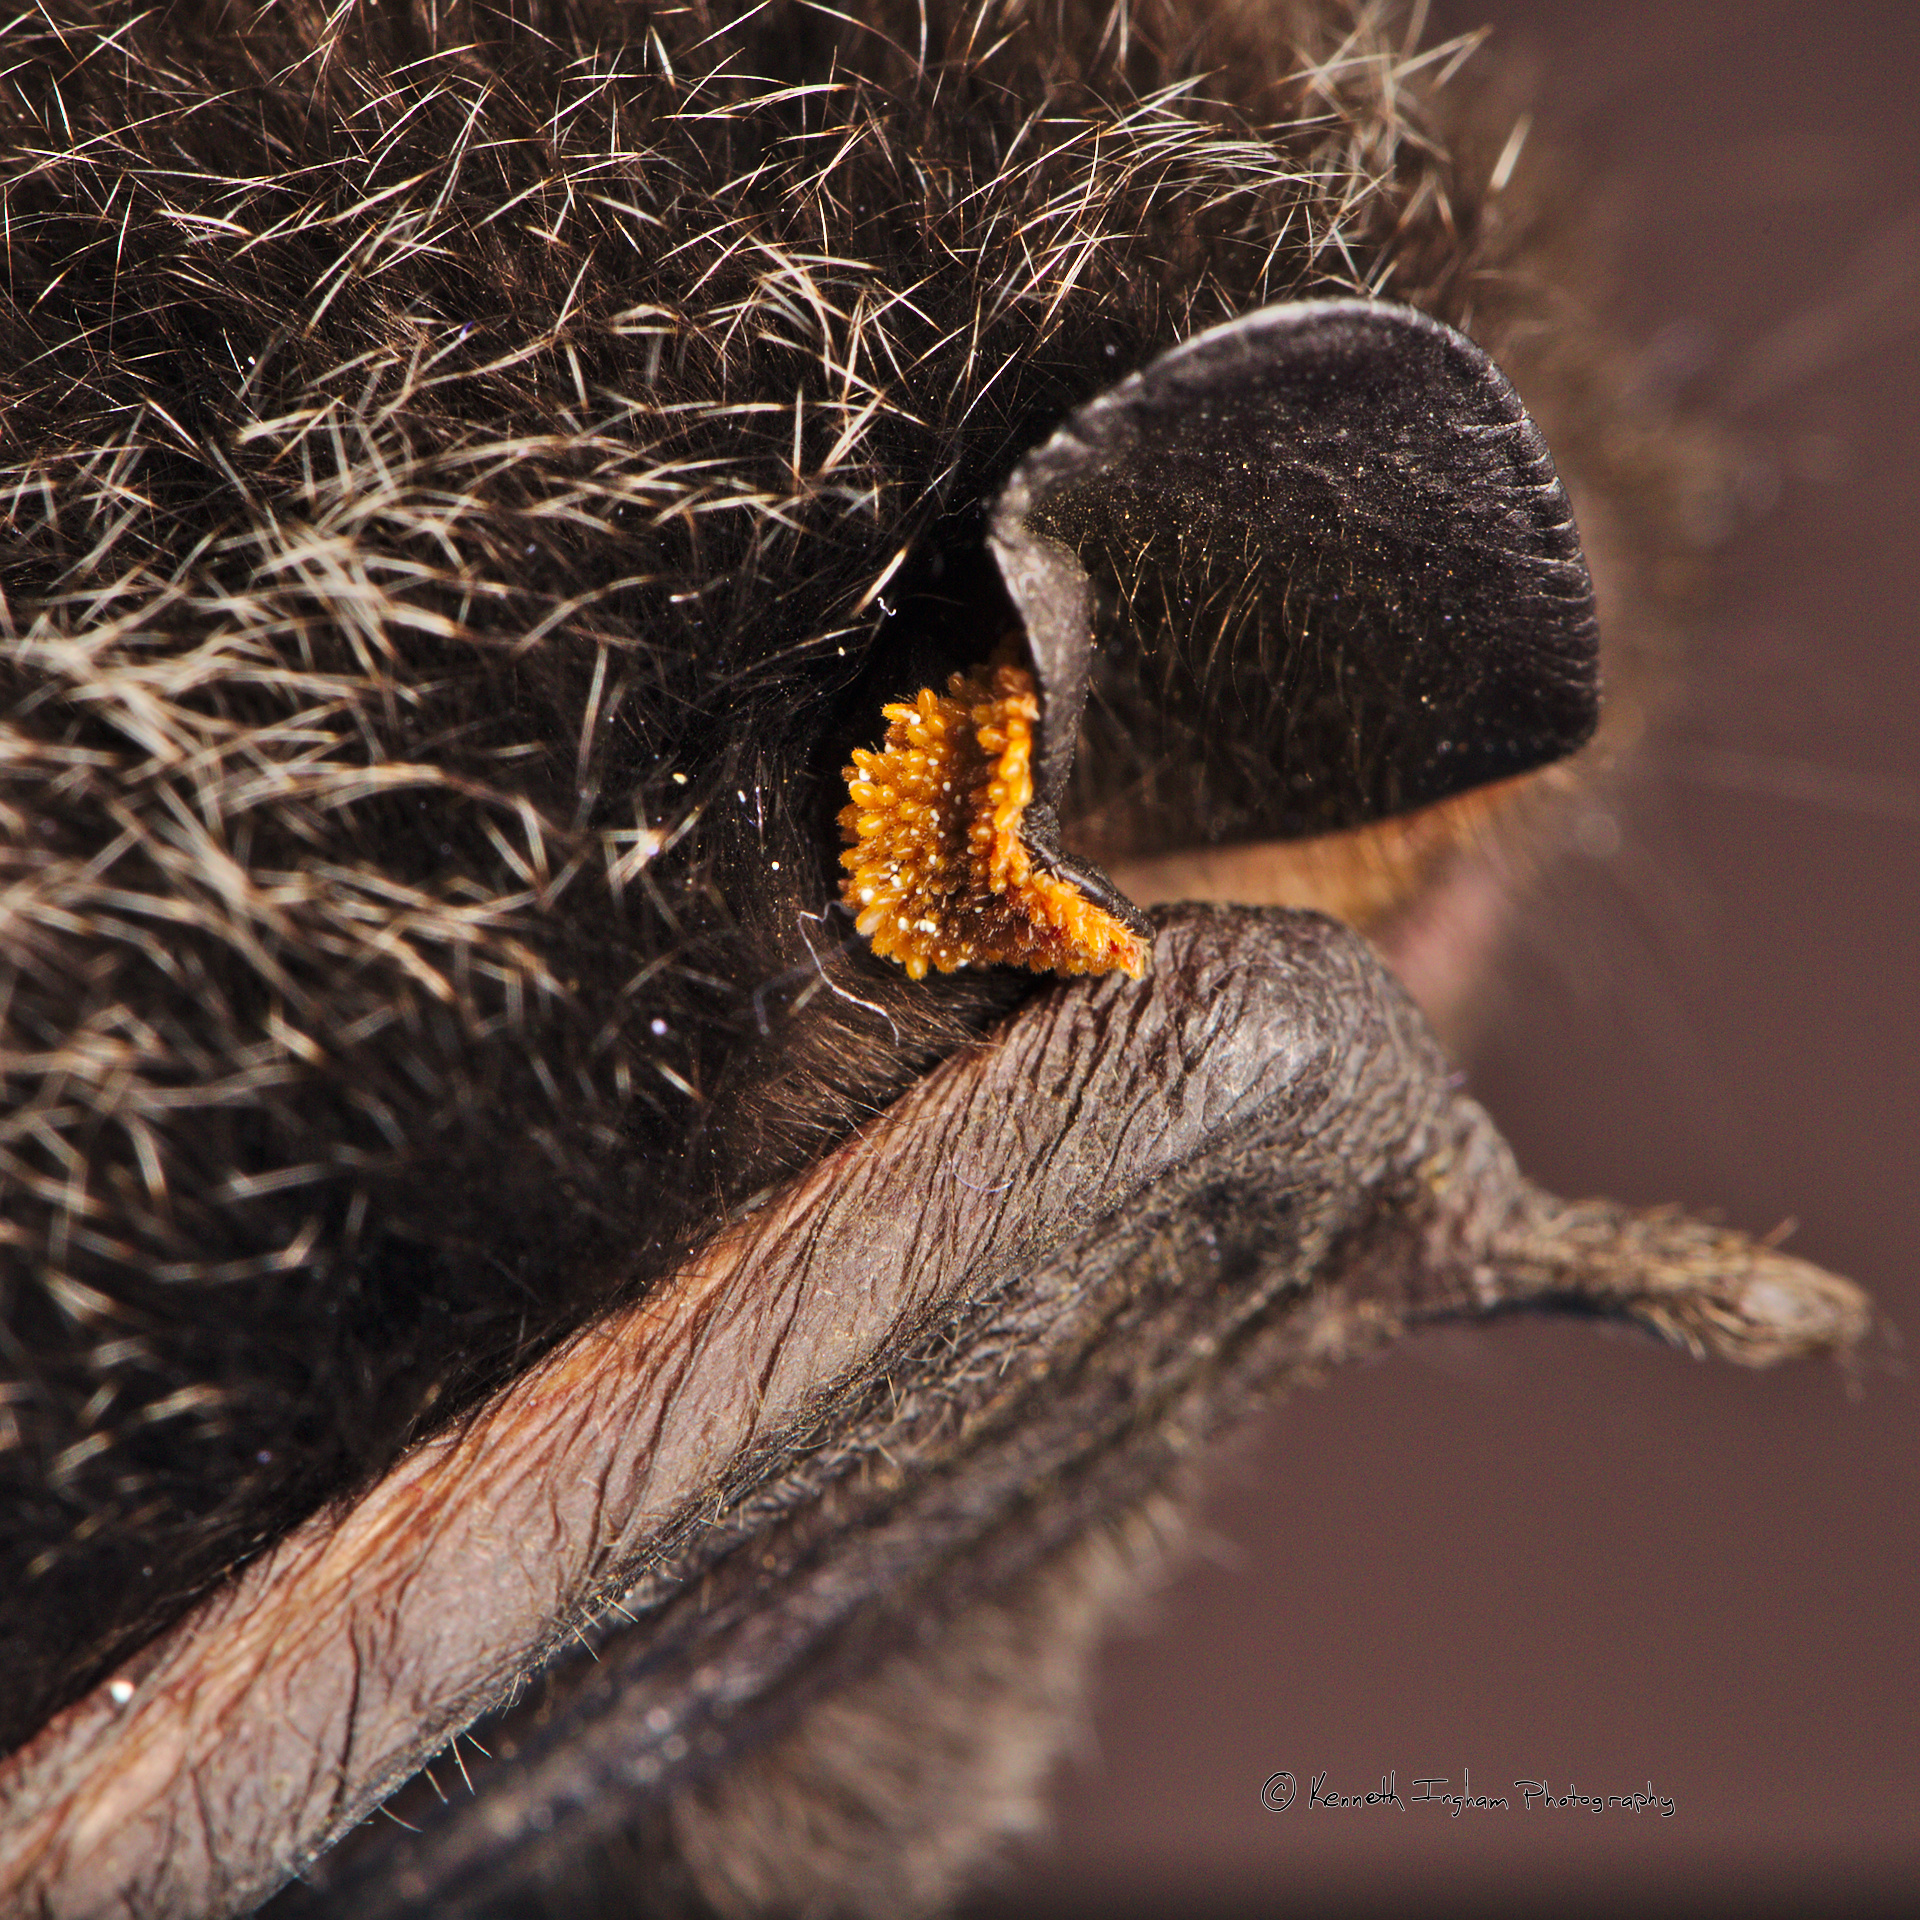 Parasites on a silver-haired (Lasionycteris noctivagans) bat's e